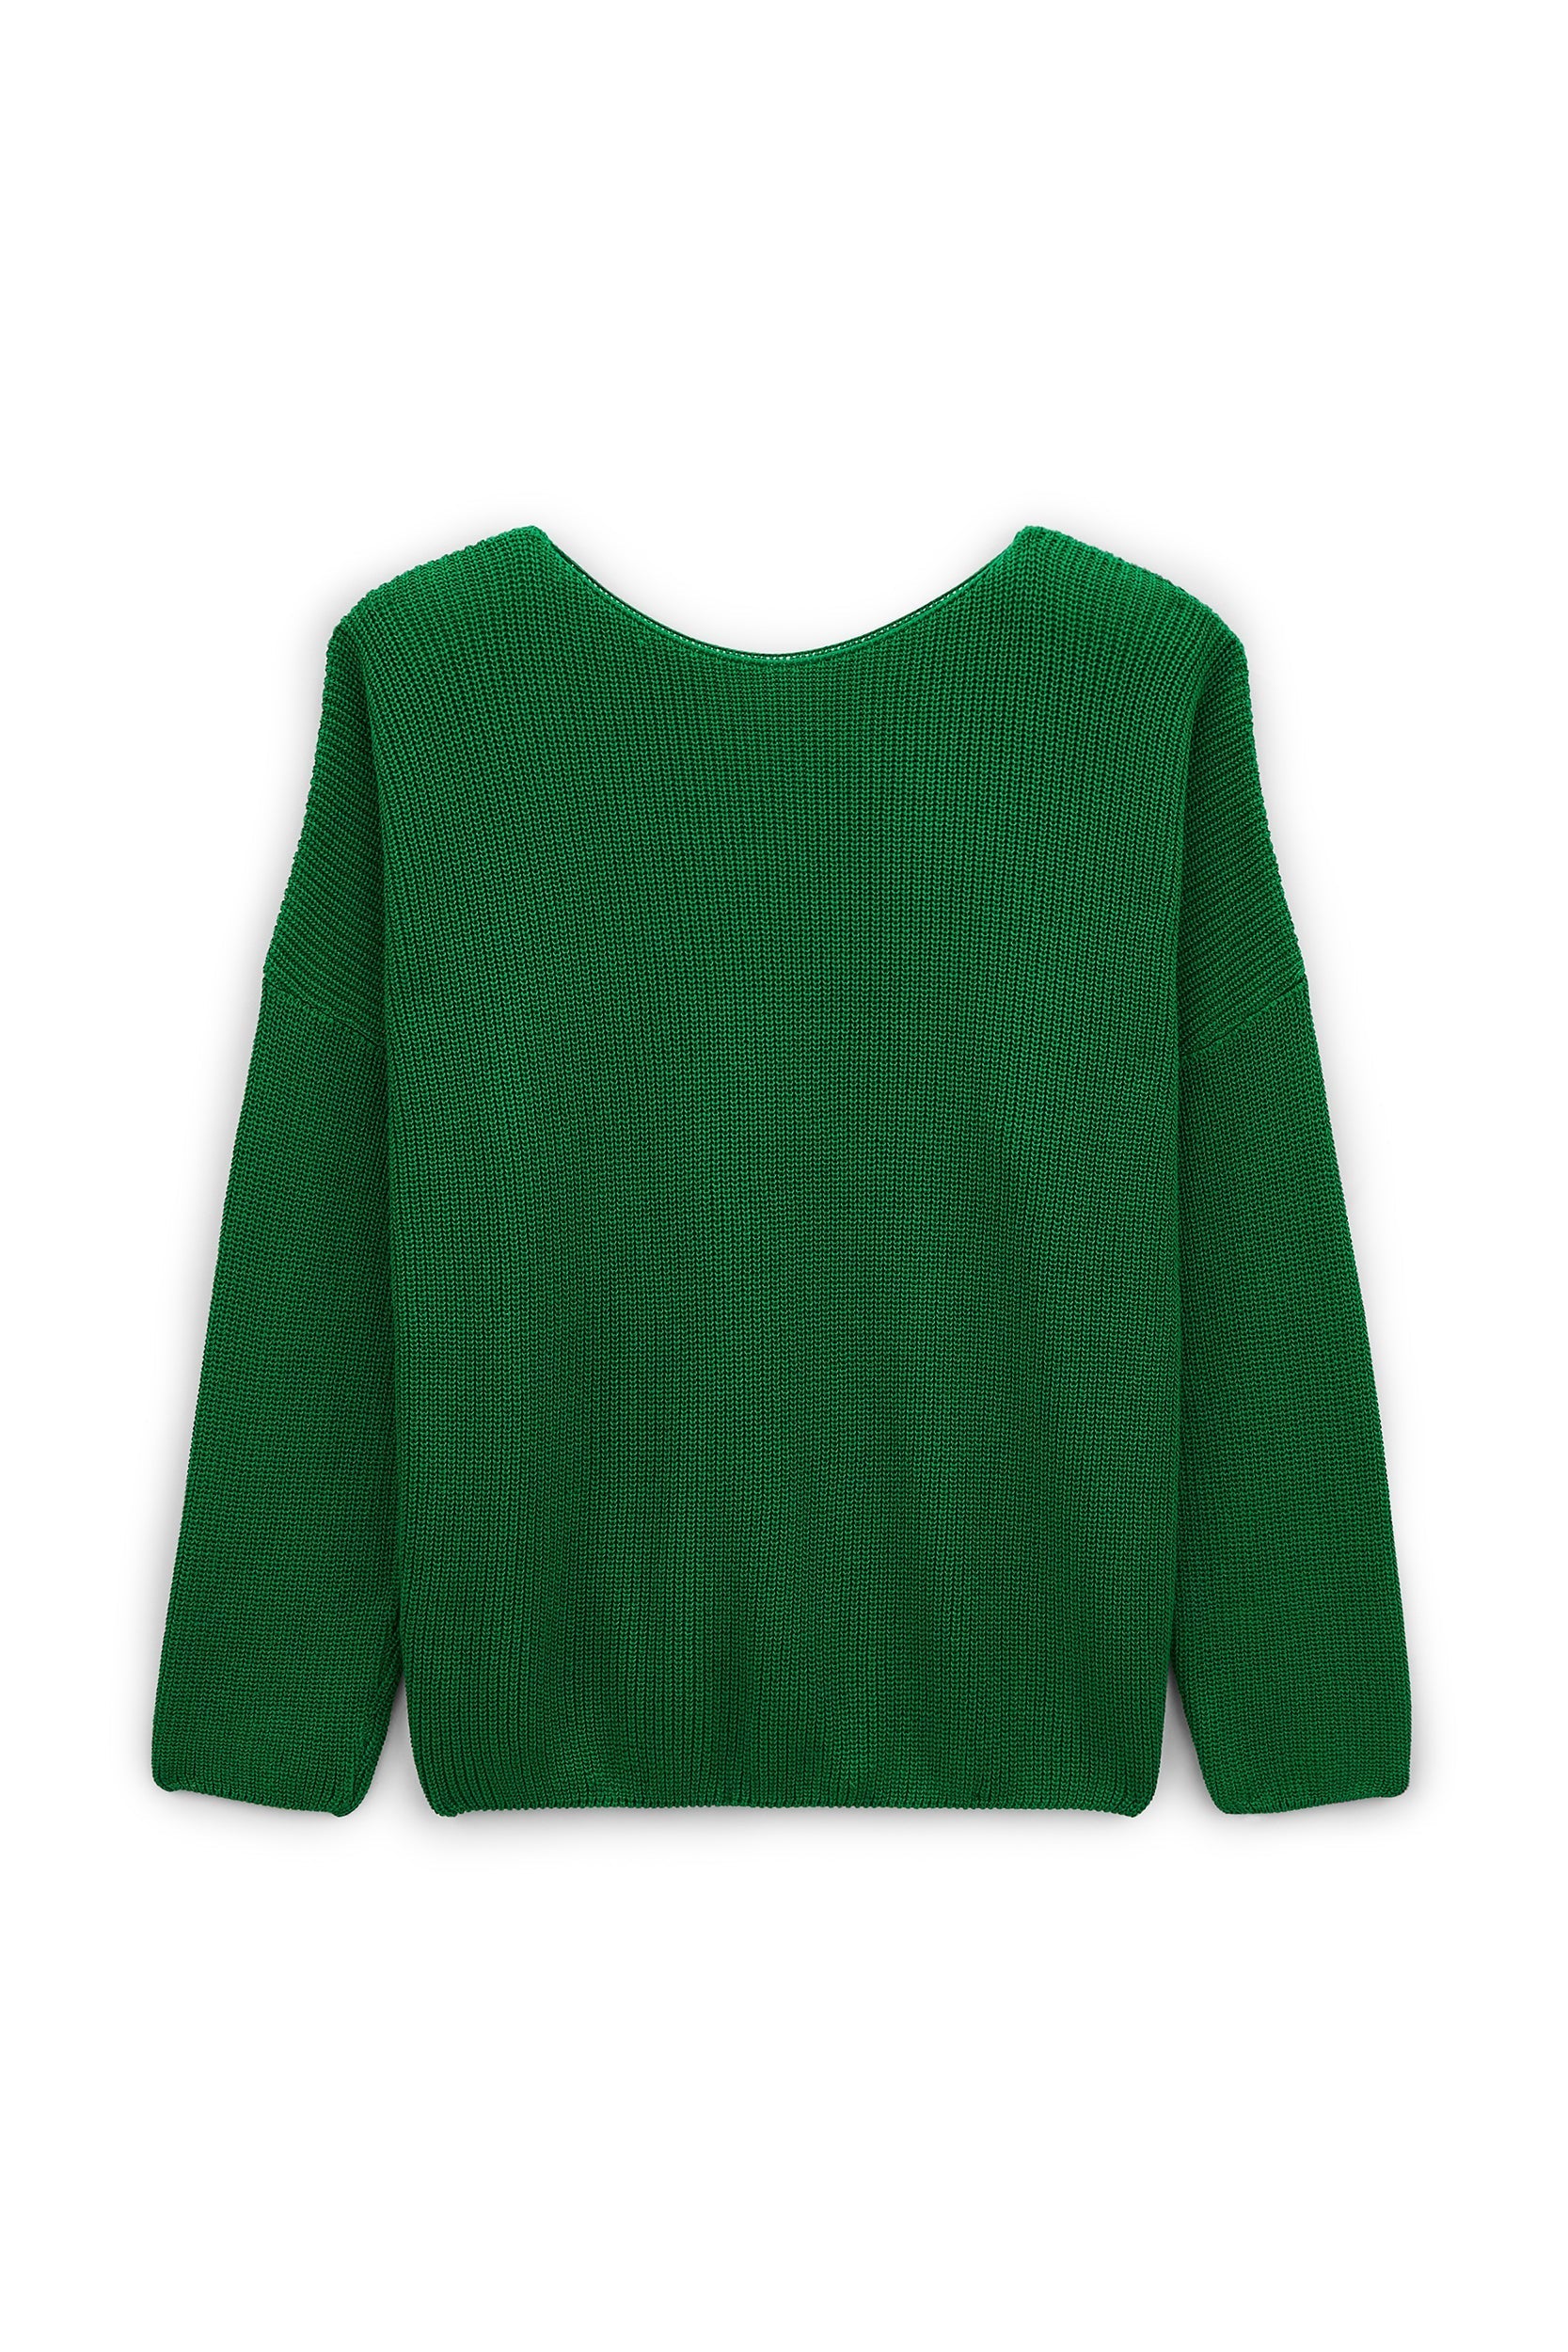 Frisson sweater green